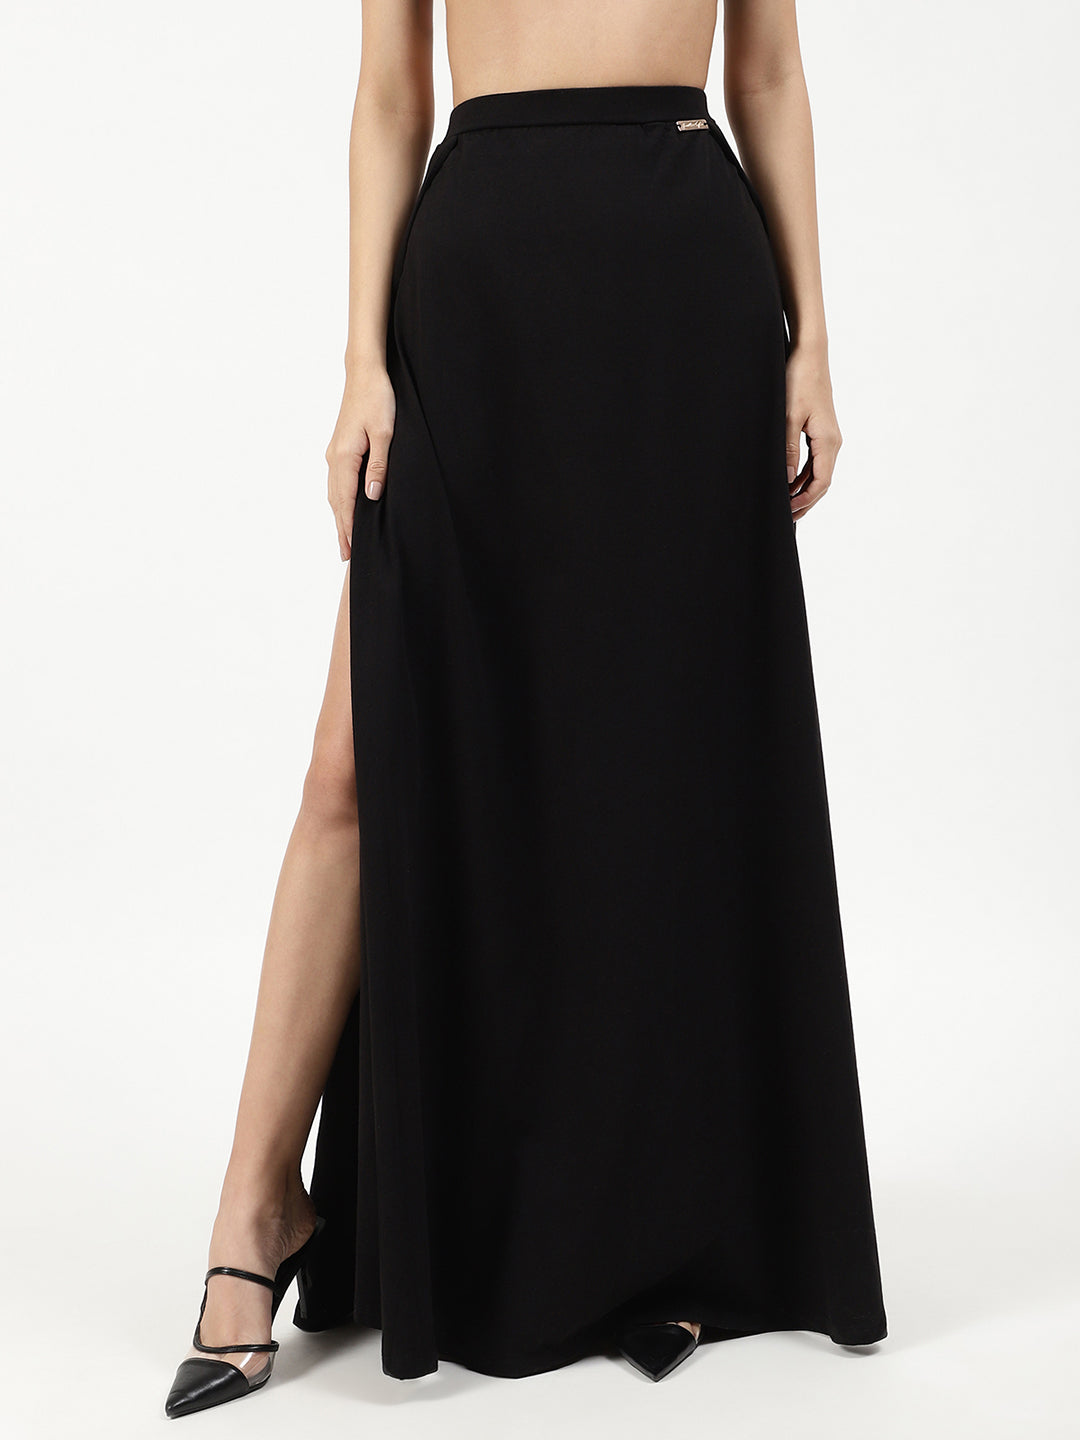 Kendall + Kylie Women Black Solid Loose Fit Skirt